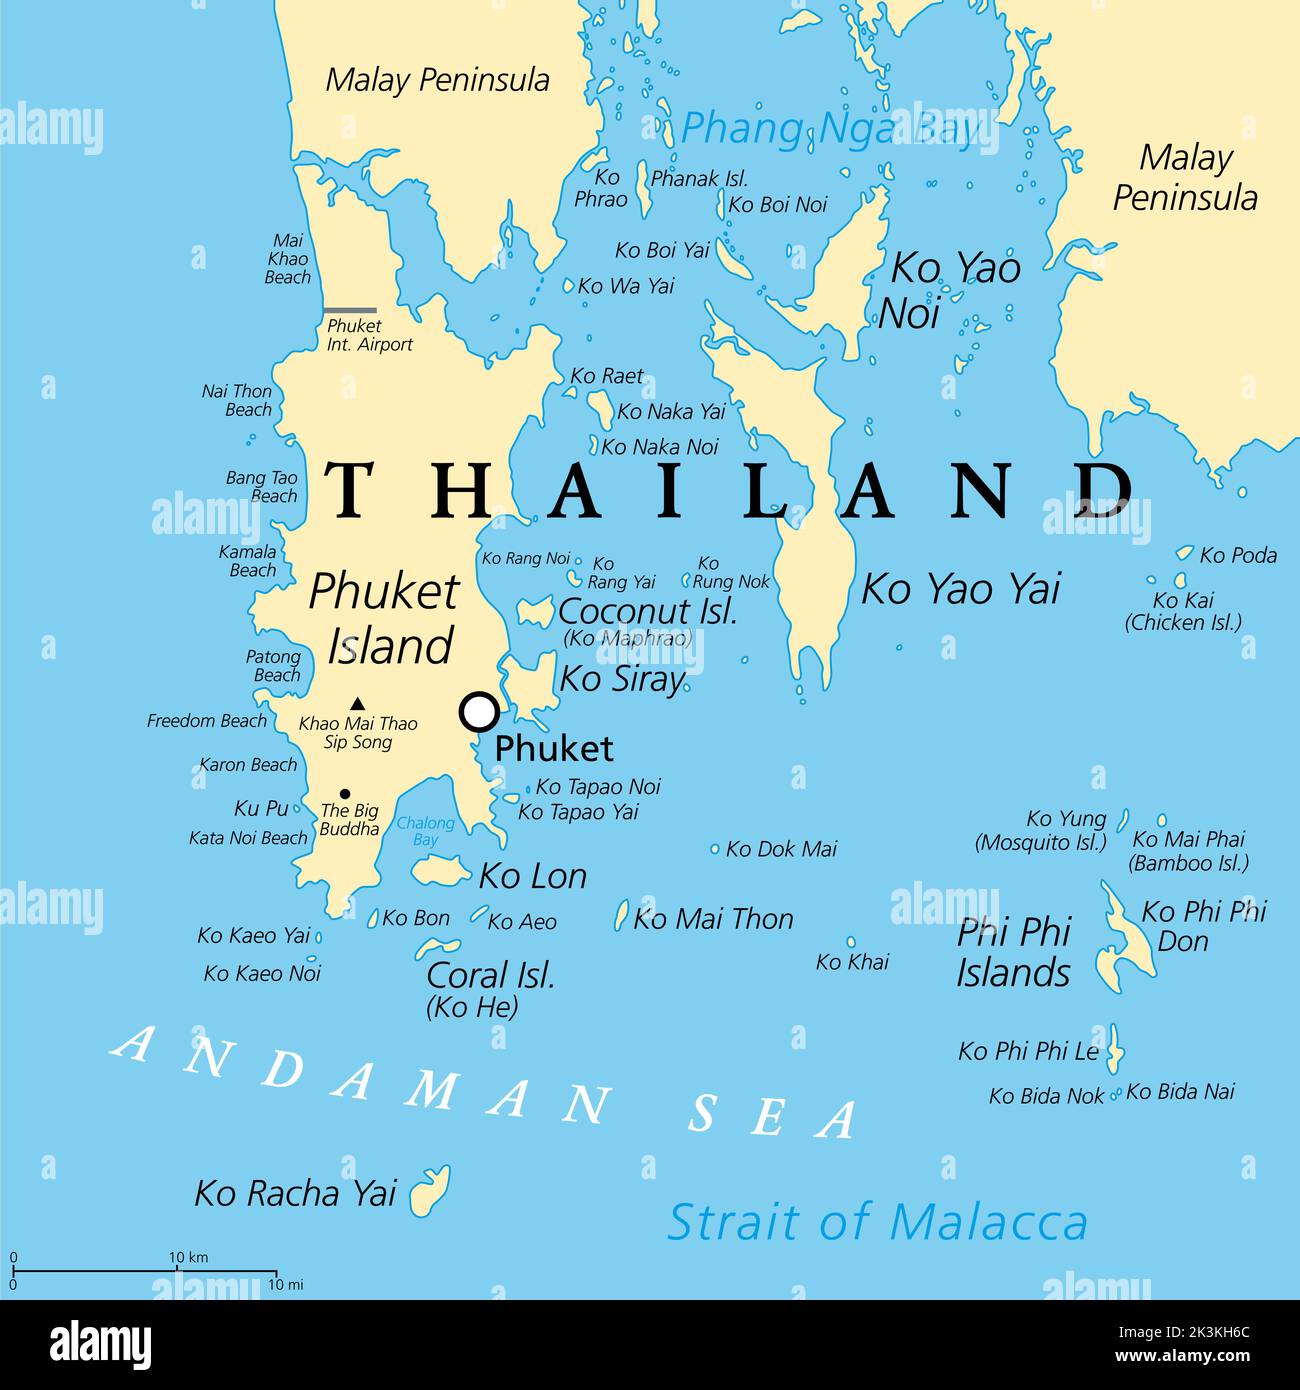 Phuket, largest Island of Thailand, political map with surrounding area. Popular tourist region with plenty of islands, south of Malay Peninsula. Stock Photo